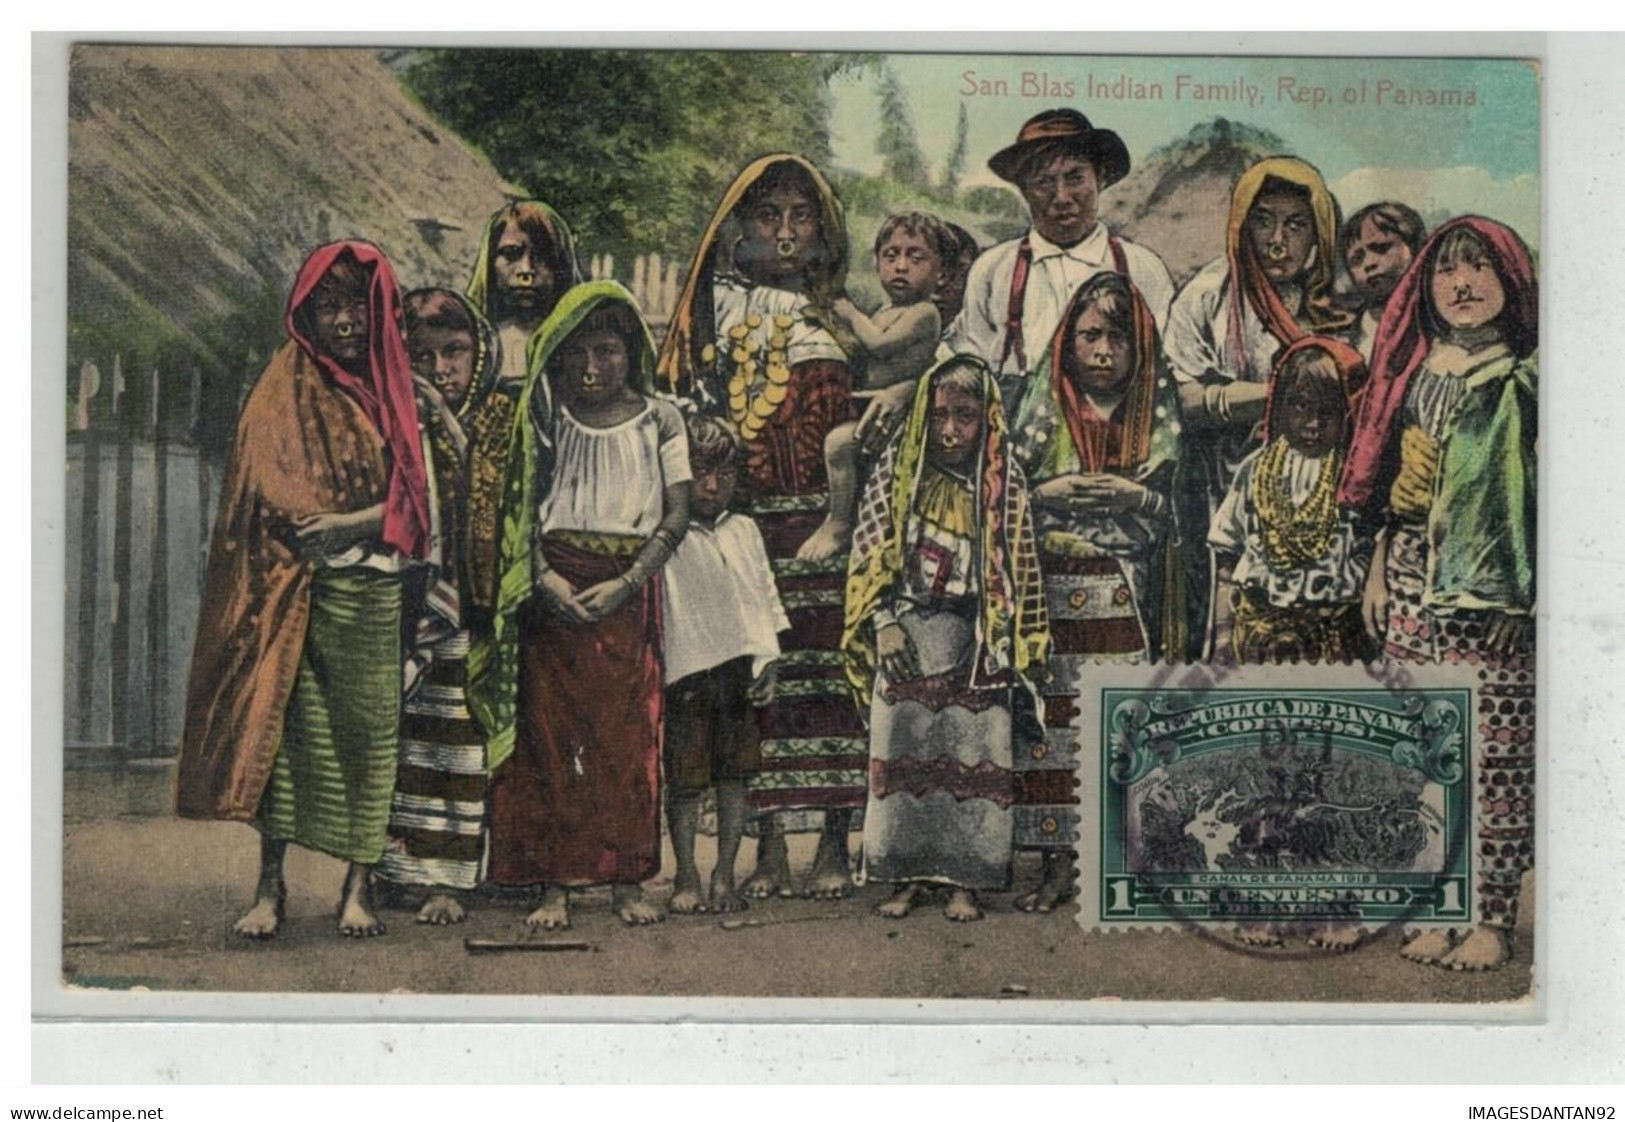 PANAMA #17621 SAN BLAS INDIAN FAMILY FAMILLE INDIENNE - Panamá